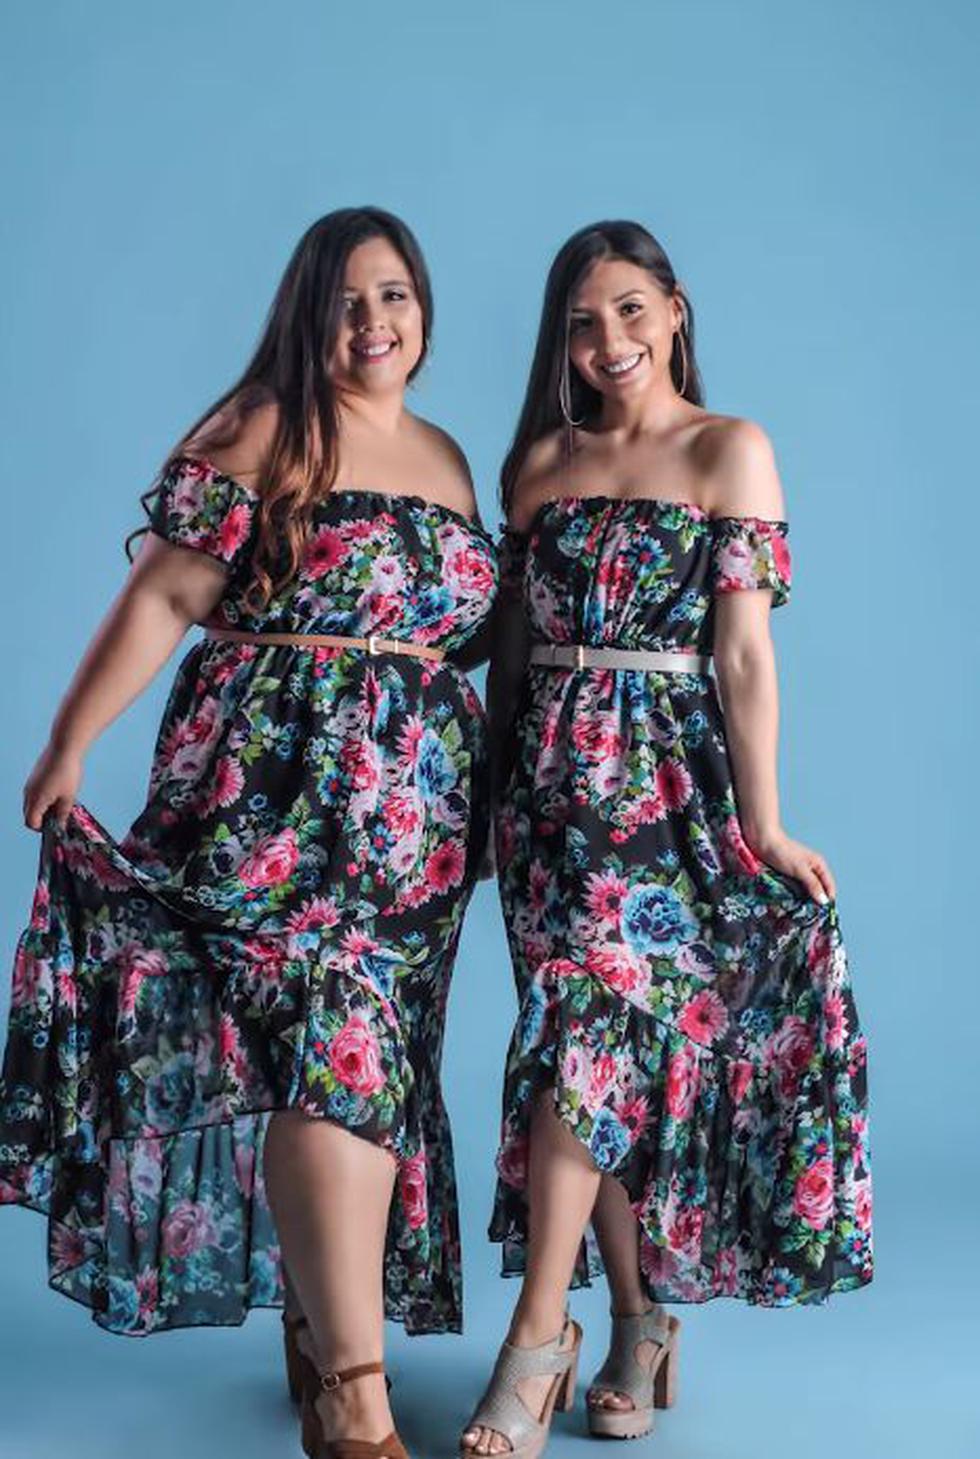 Emprendedoras presentan ropa para mujeres de tallas size con diseños | EMPRENDEDORES | PERU21